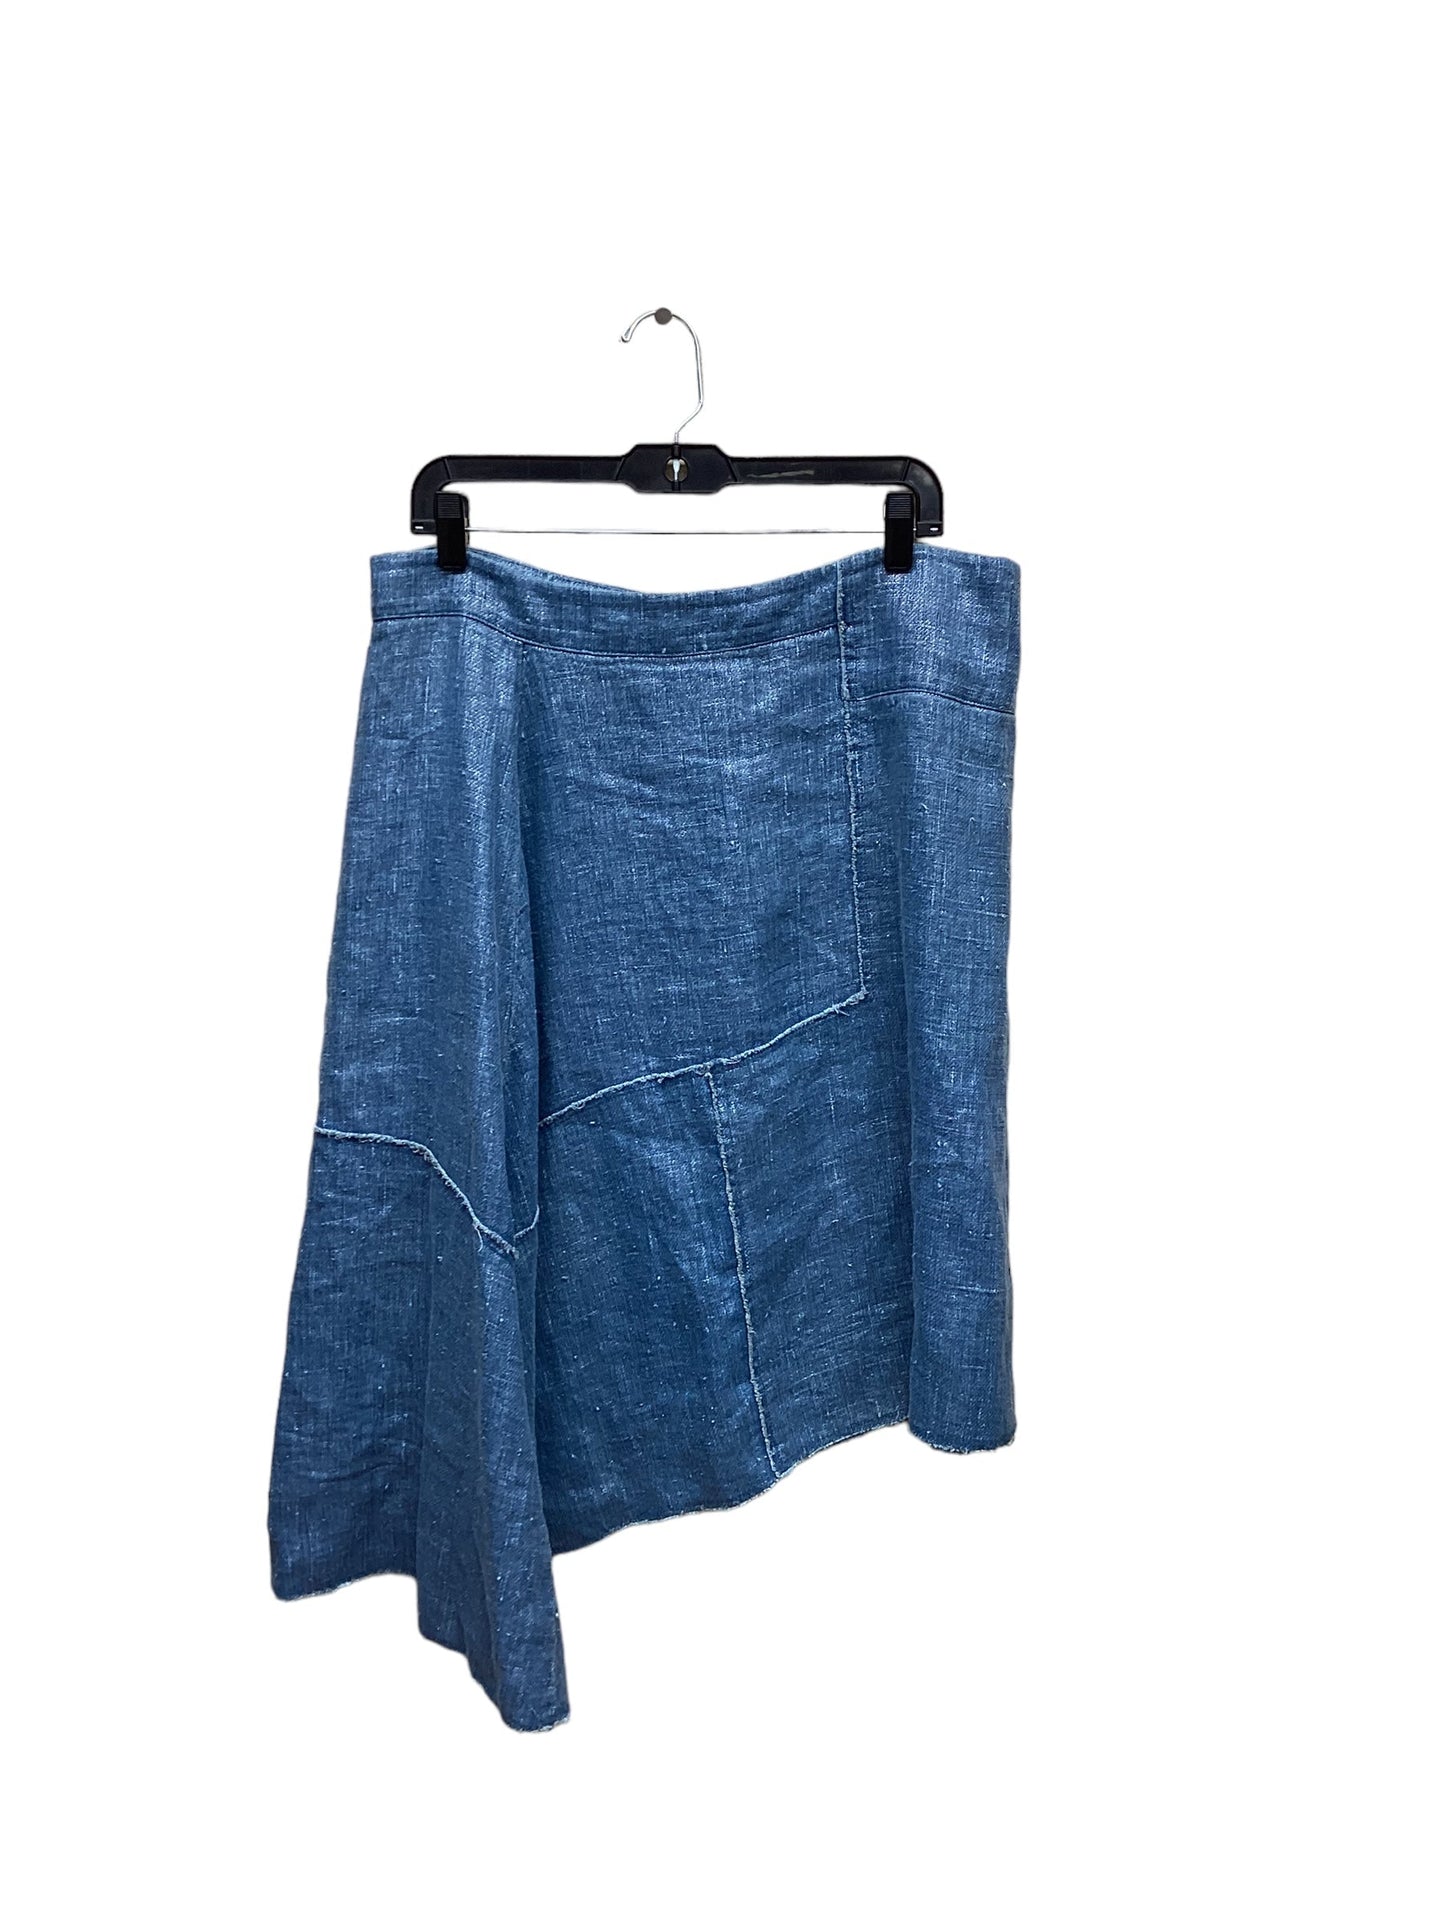 Skirt Midi By Pilcro  Size: 14